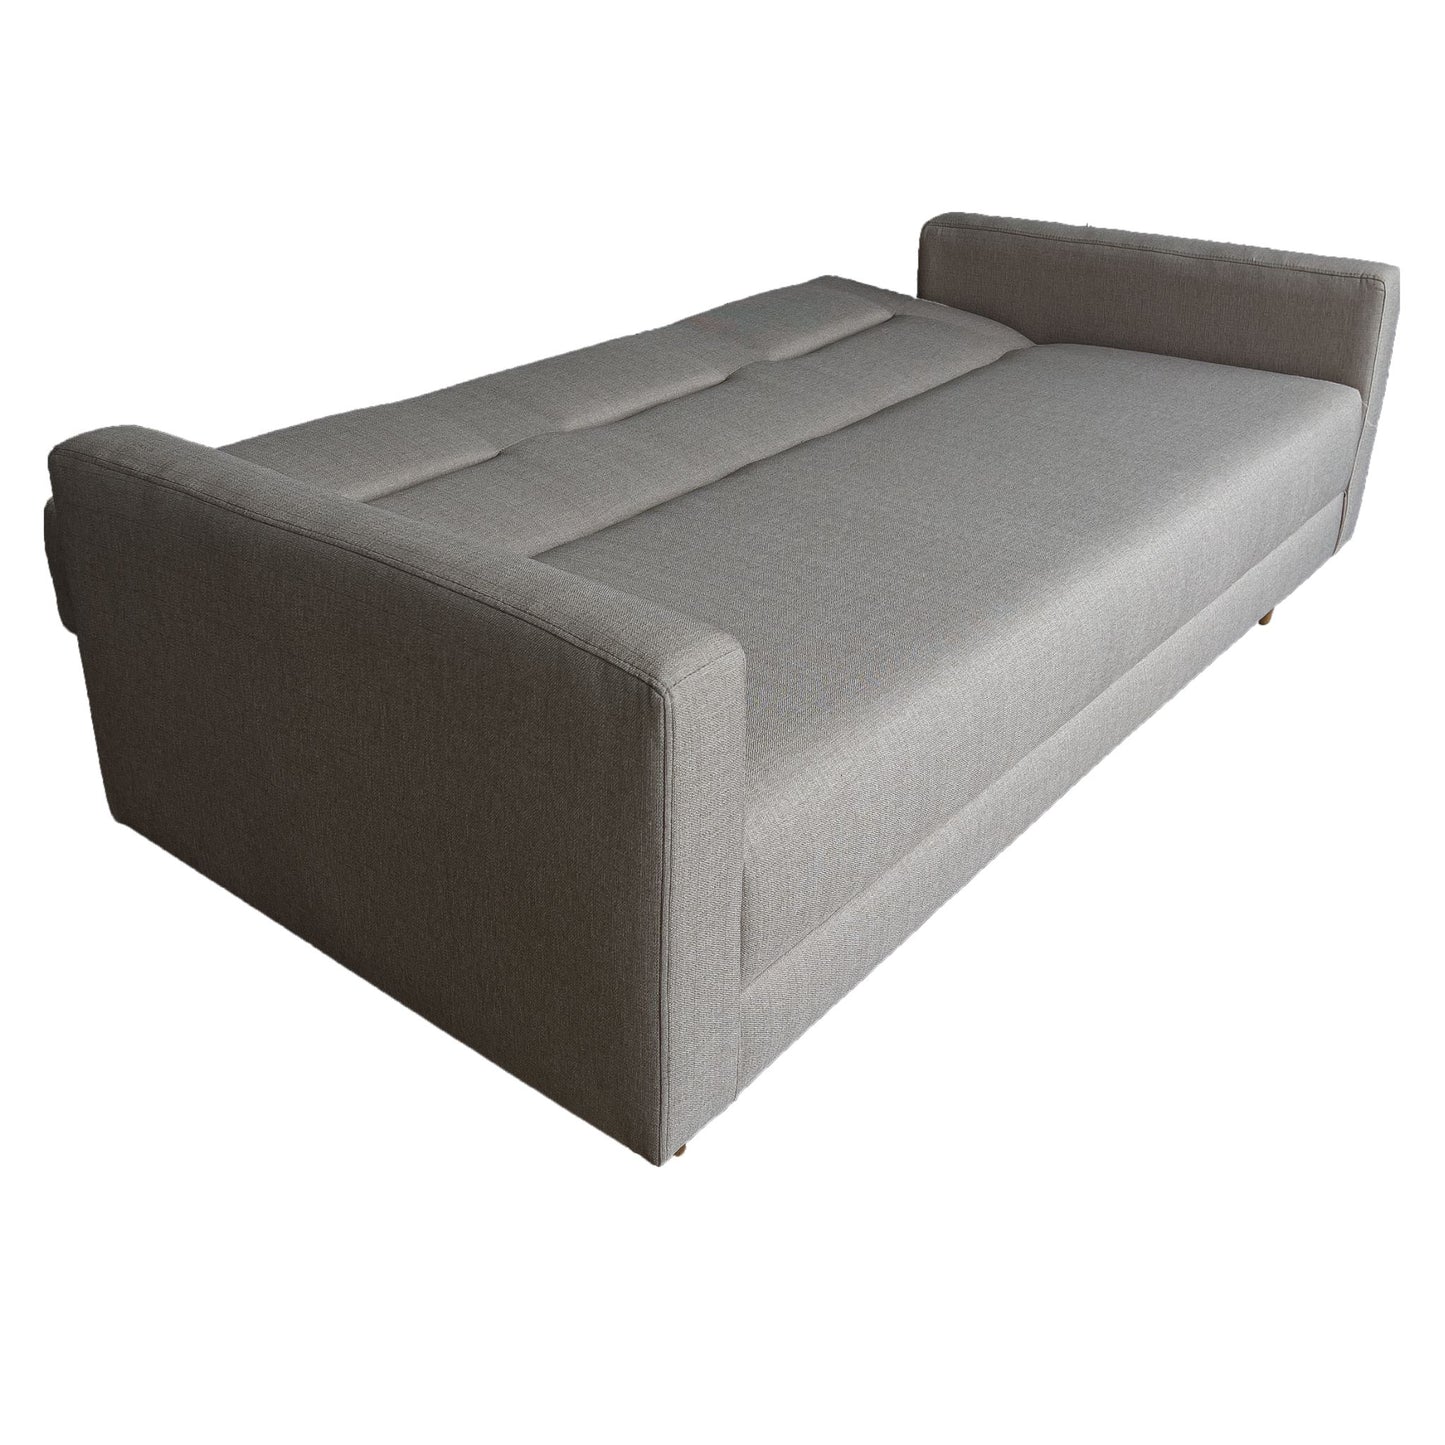 SETH 3 Seater Sofa Bed Pradera Marfil